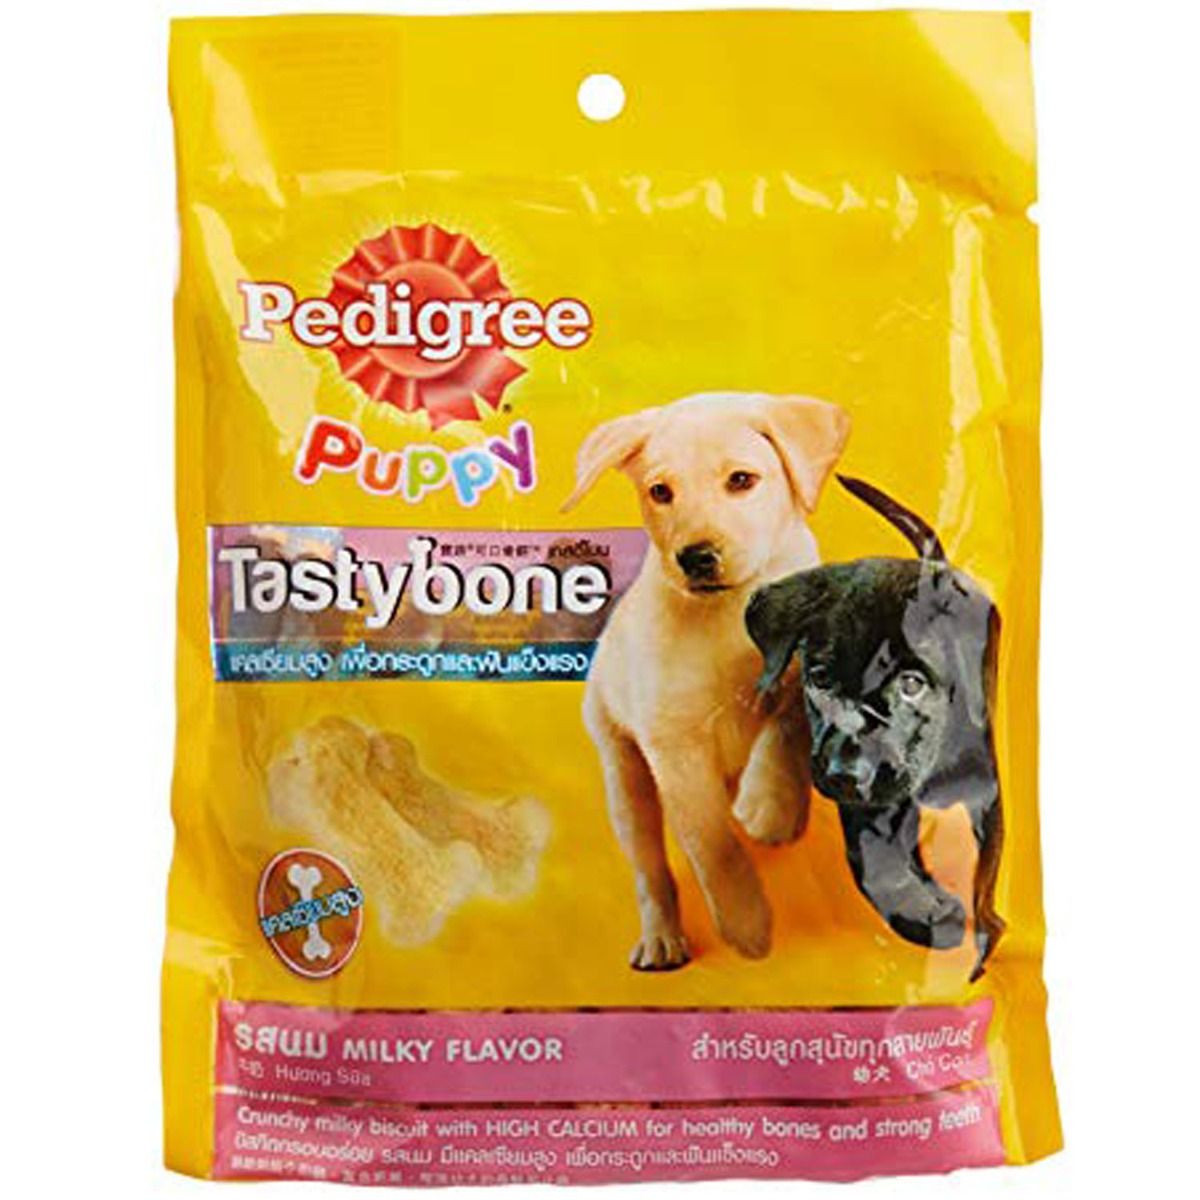 Pedigree Puppy Tastybone, 200 gm, Pack of 1 